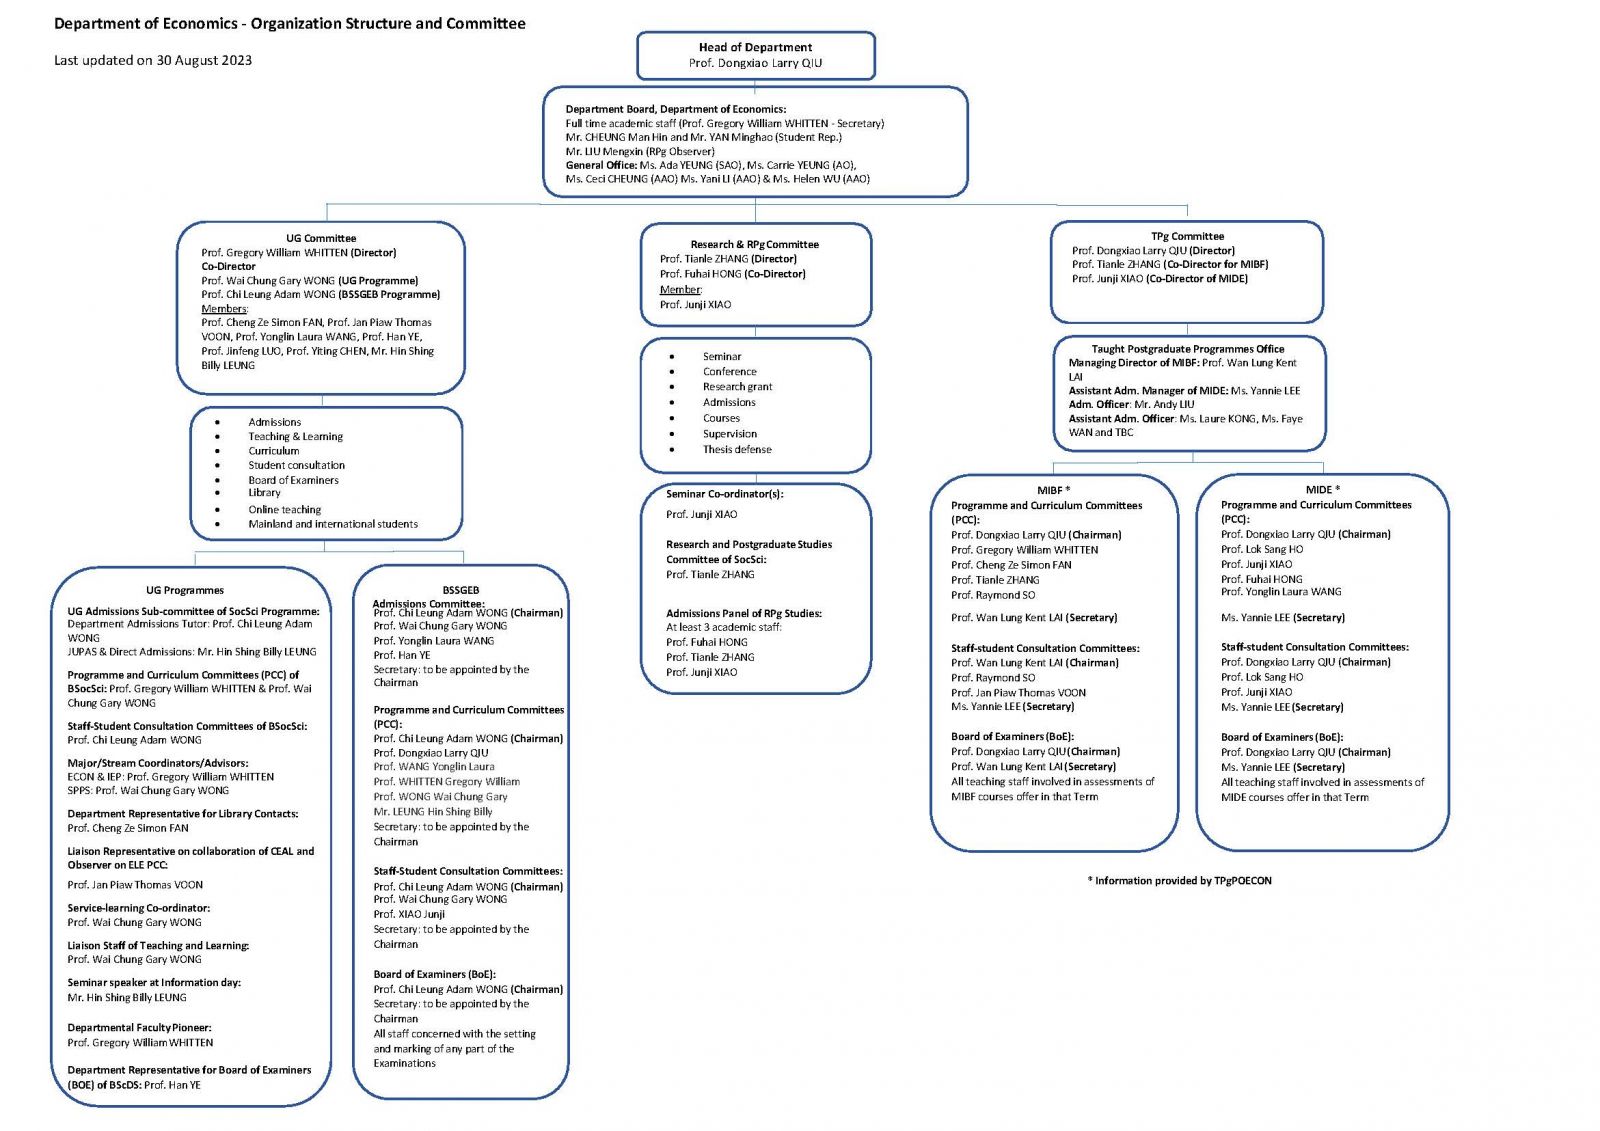 Organisation Structure, Department of Economics